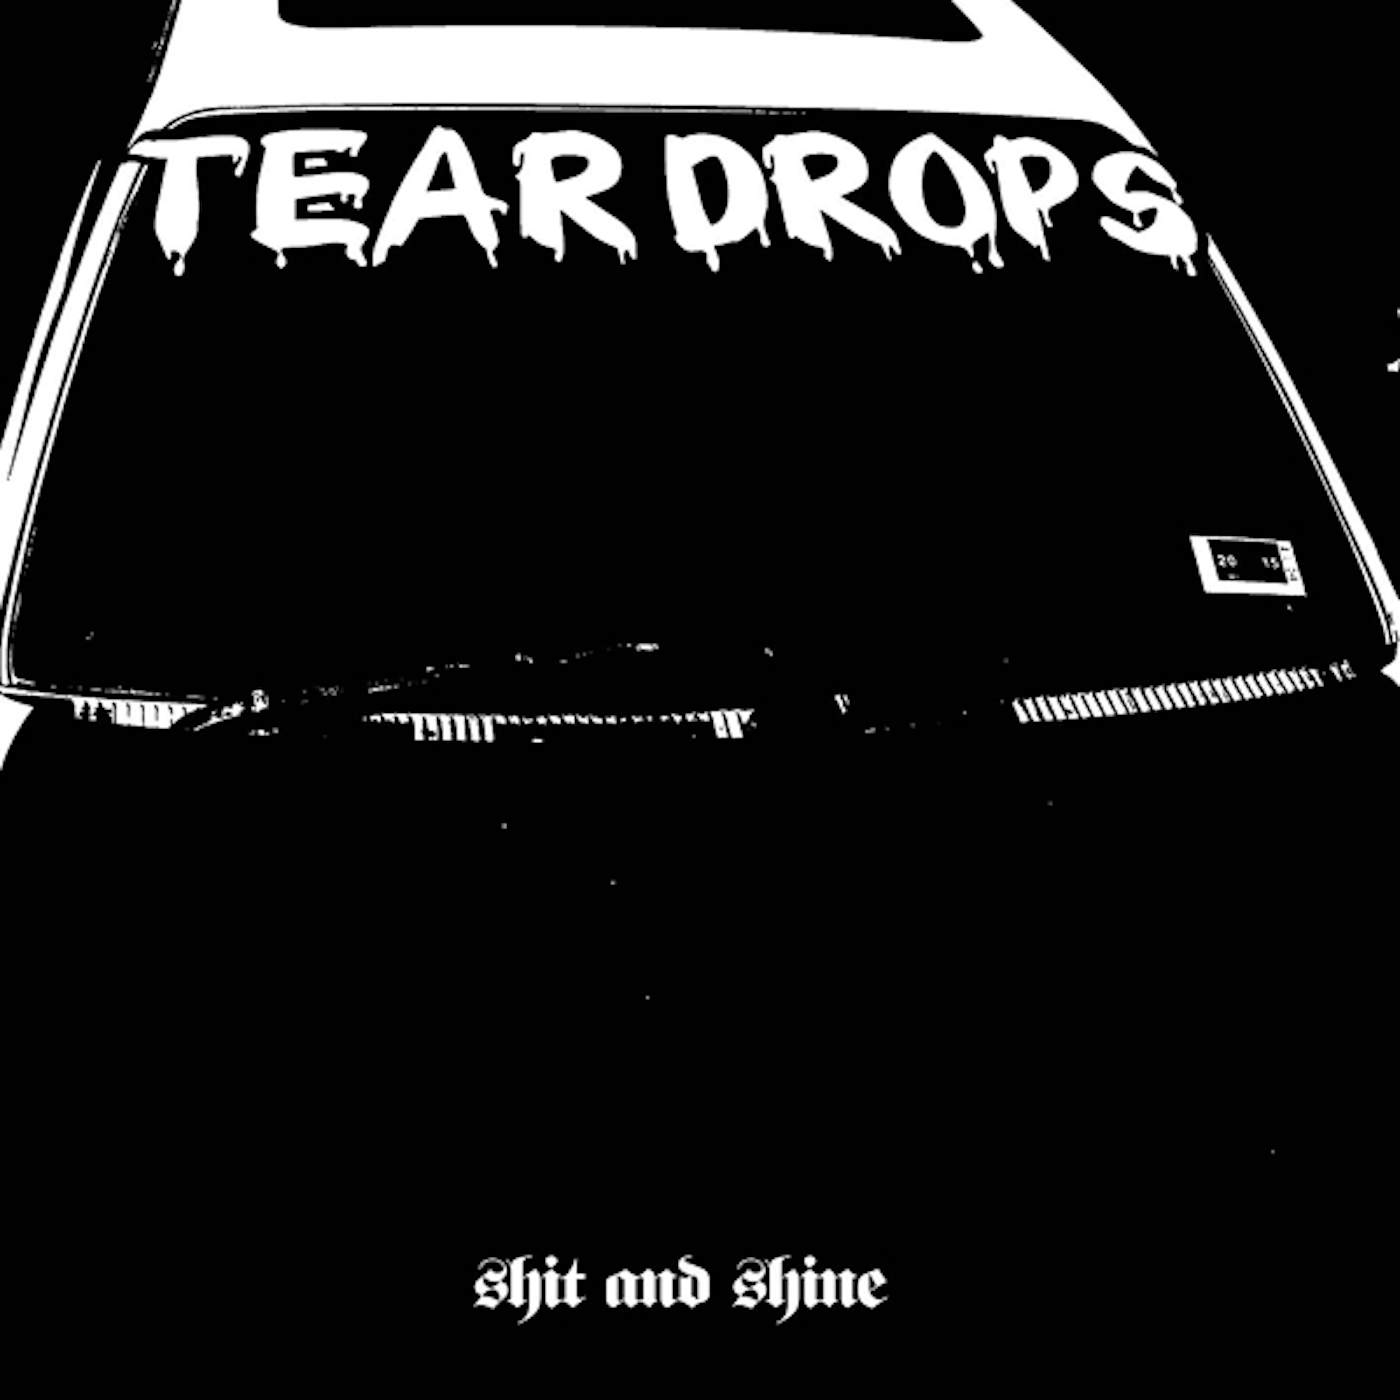 Shit And Shine Teardrops Vinyl Record